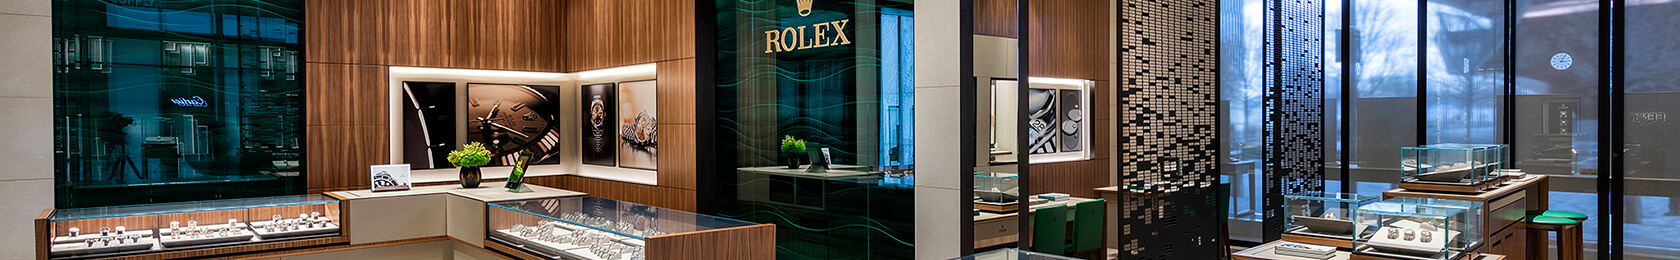 Rolex In-Store Banner